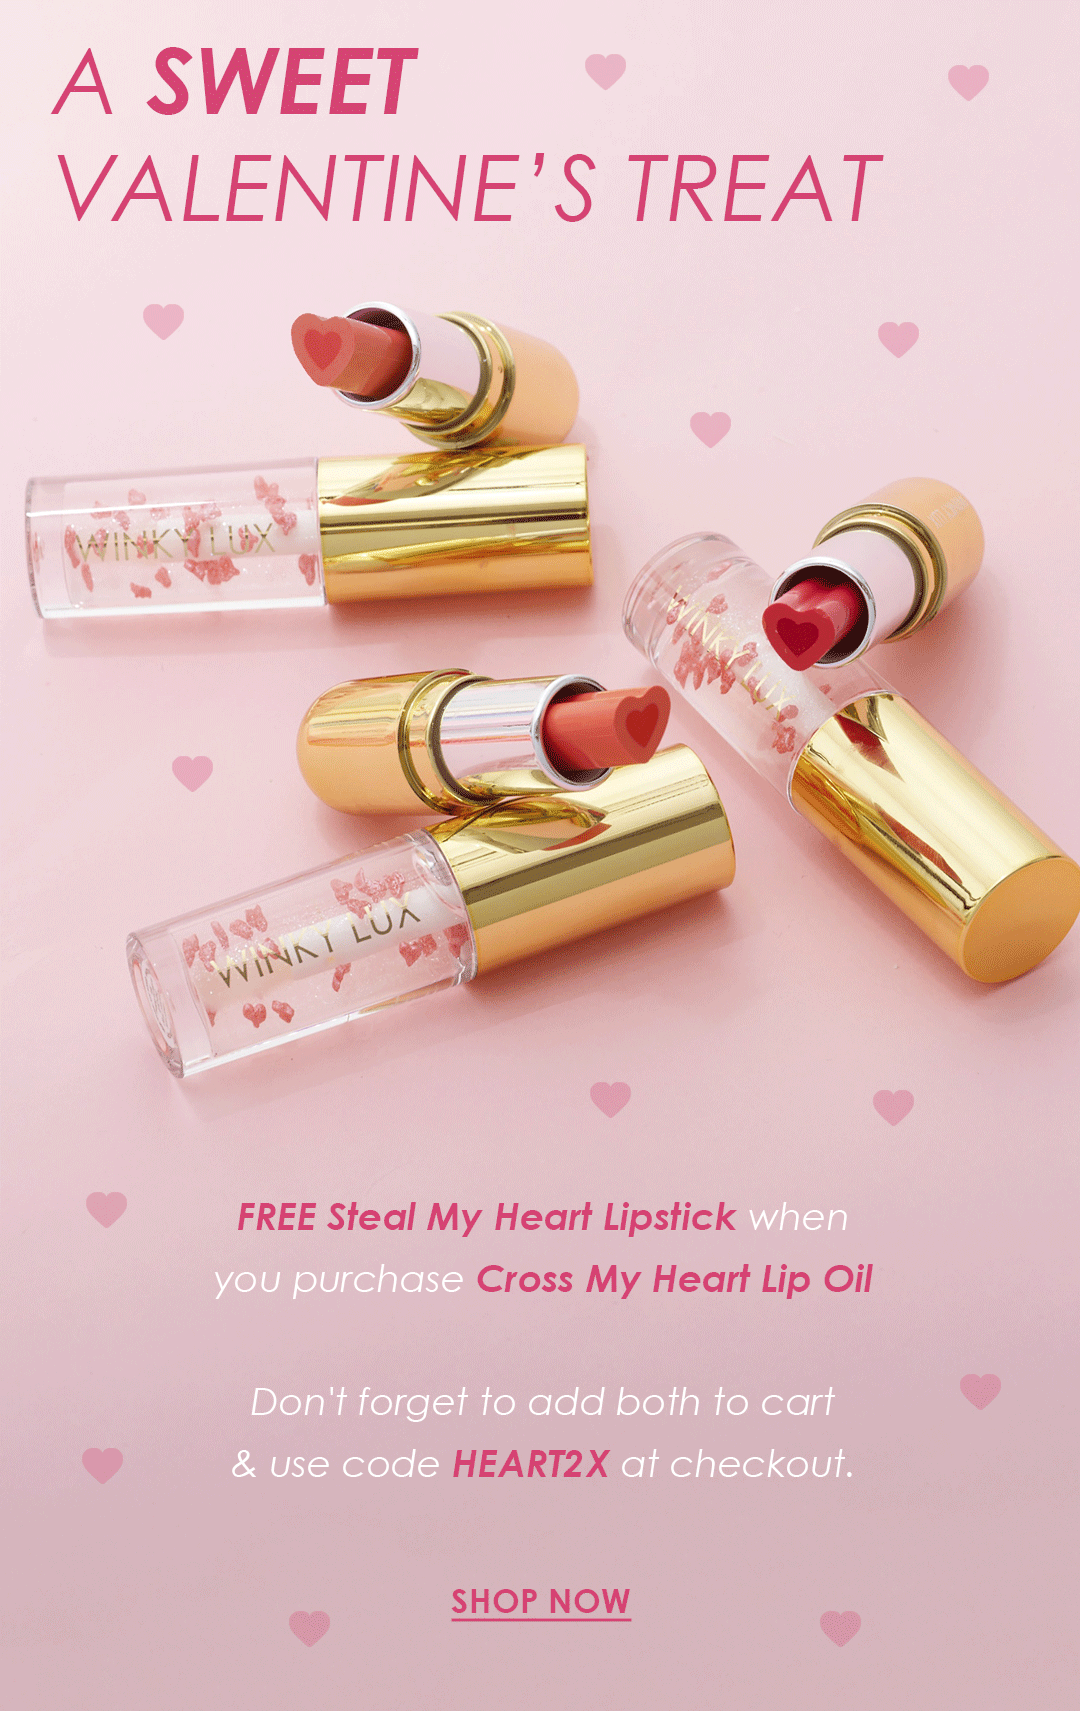 A Sweet Valentine's Treat: Free Steal My Heart Lipstick when you buy Cross My Heart Lip Oil